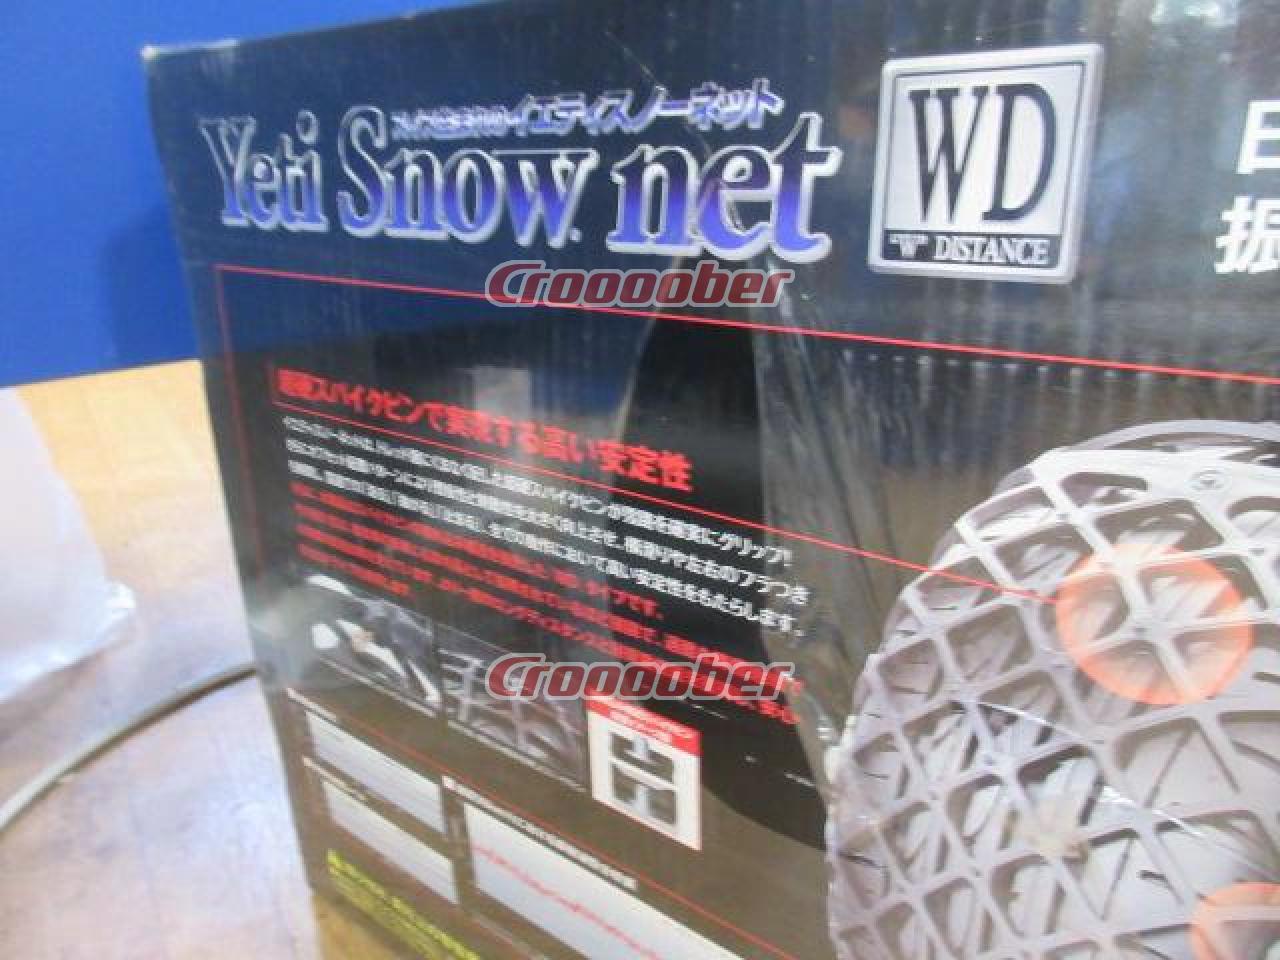 Yeti Snow Net Tire Chain 5300WD | Chains | Croooober